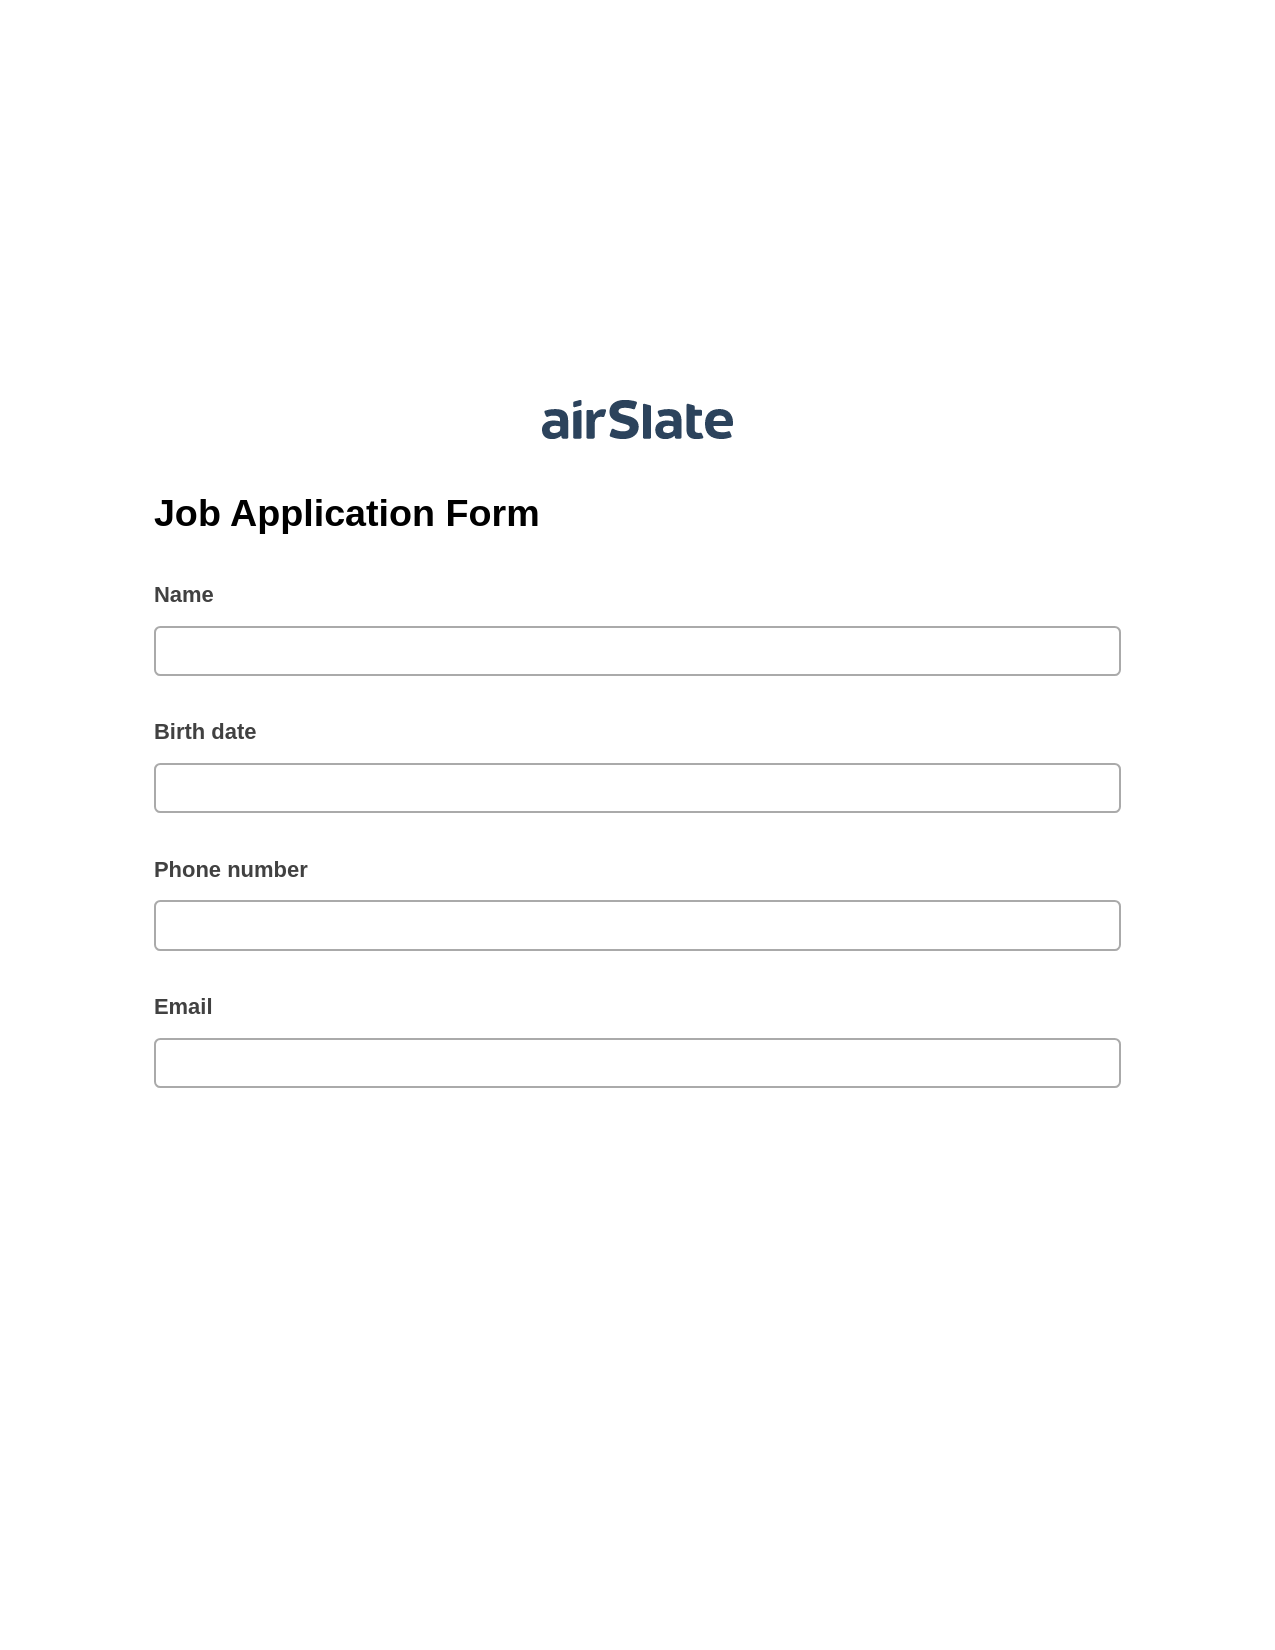 Multirole Job Application Form Pre-fill from MySQL Bot, Create slate addon, Webhook Postfinish Bot